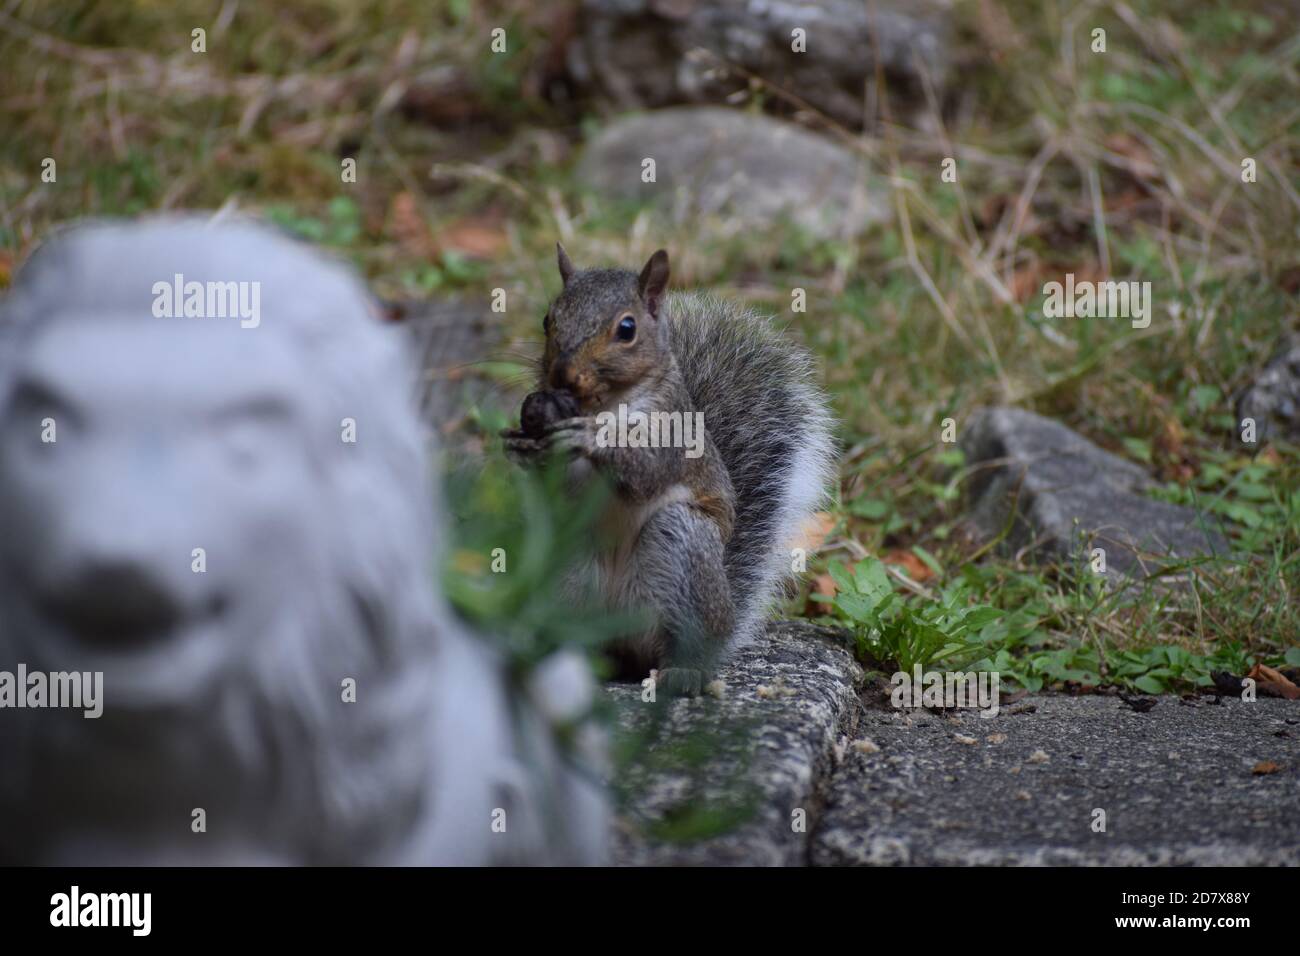 Innocence behind the wilderness. Squirrel enjoying the walnut. Stock Photo